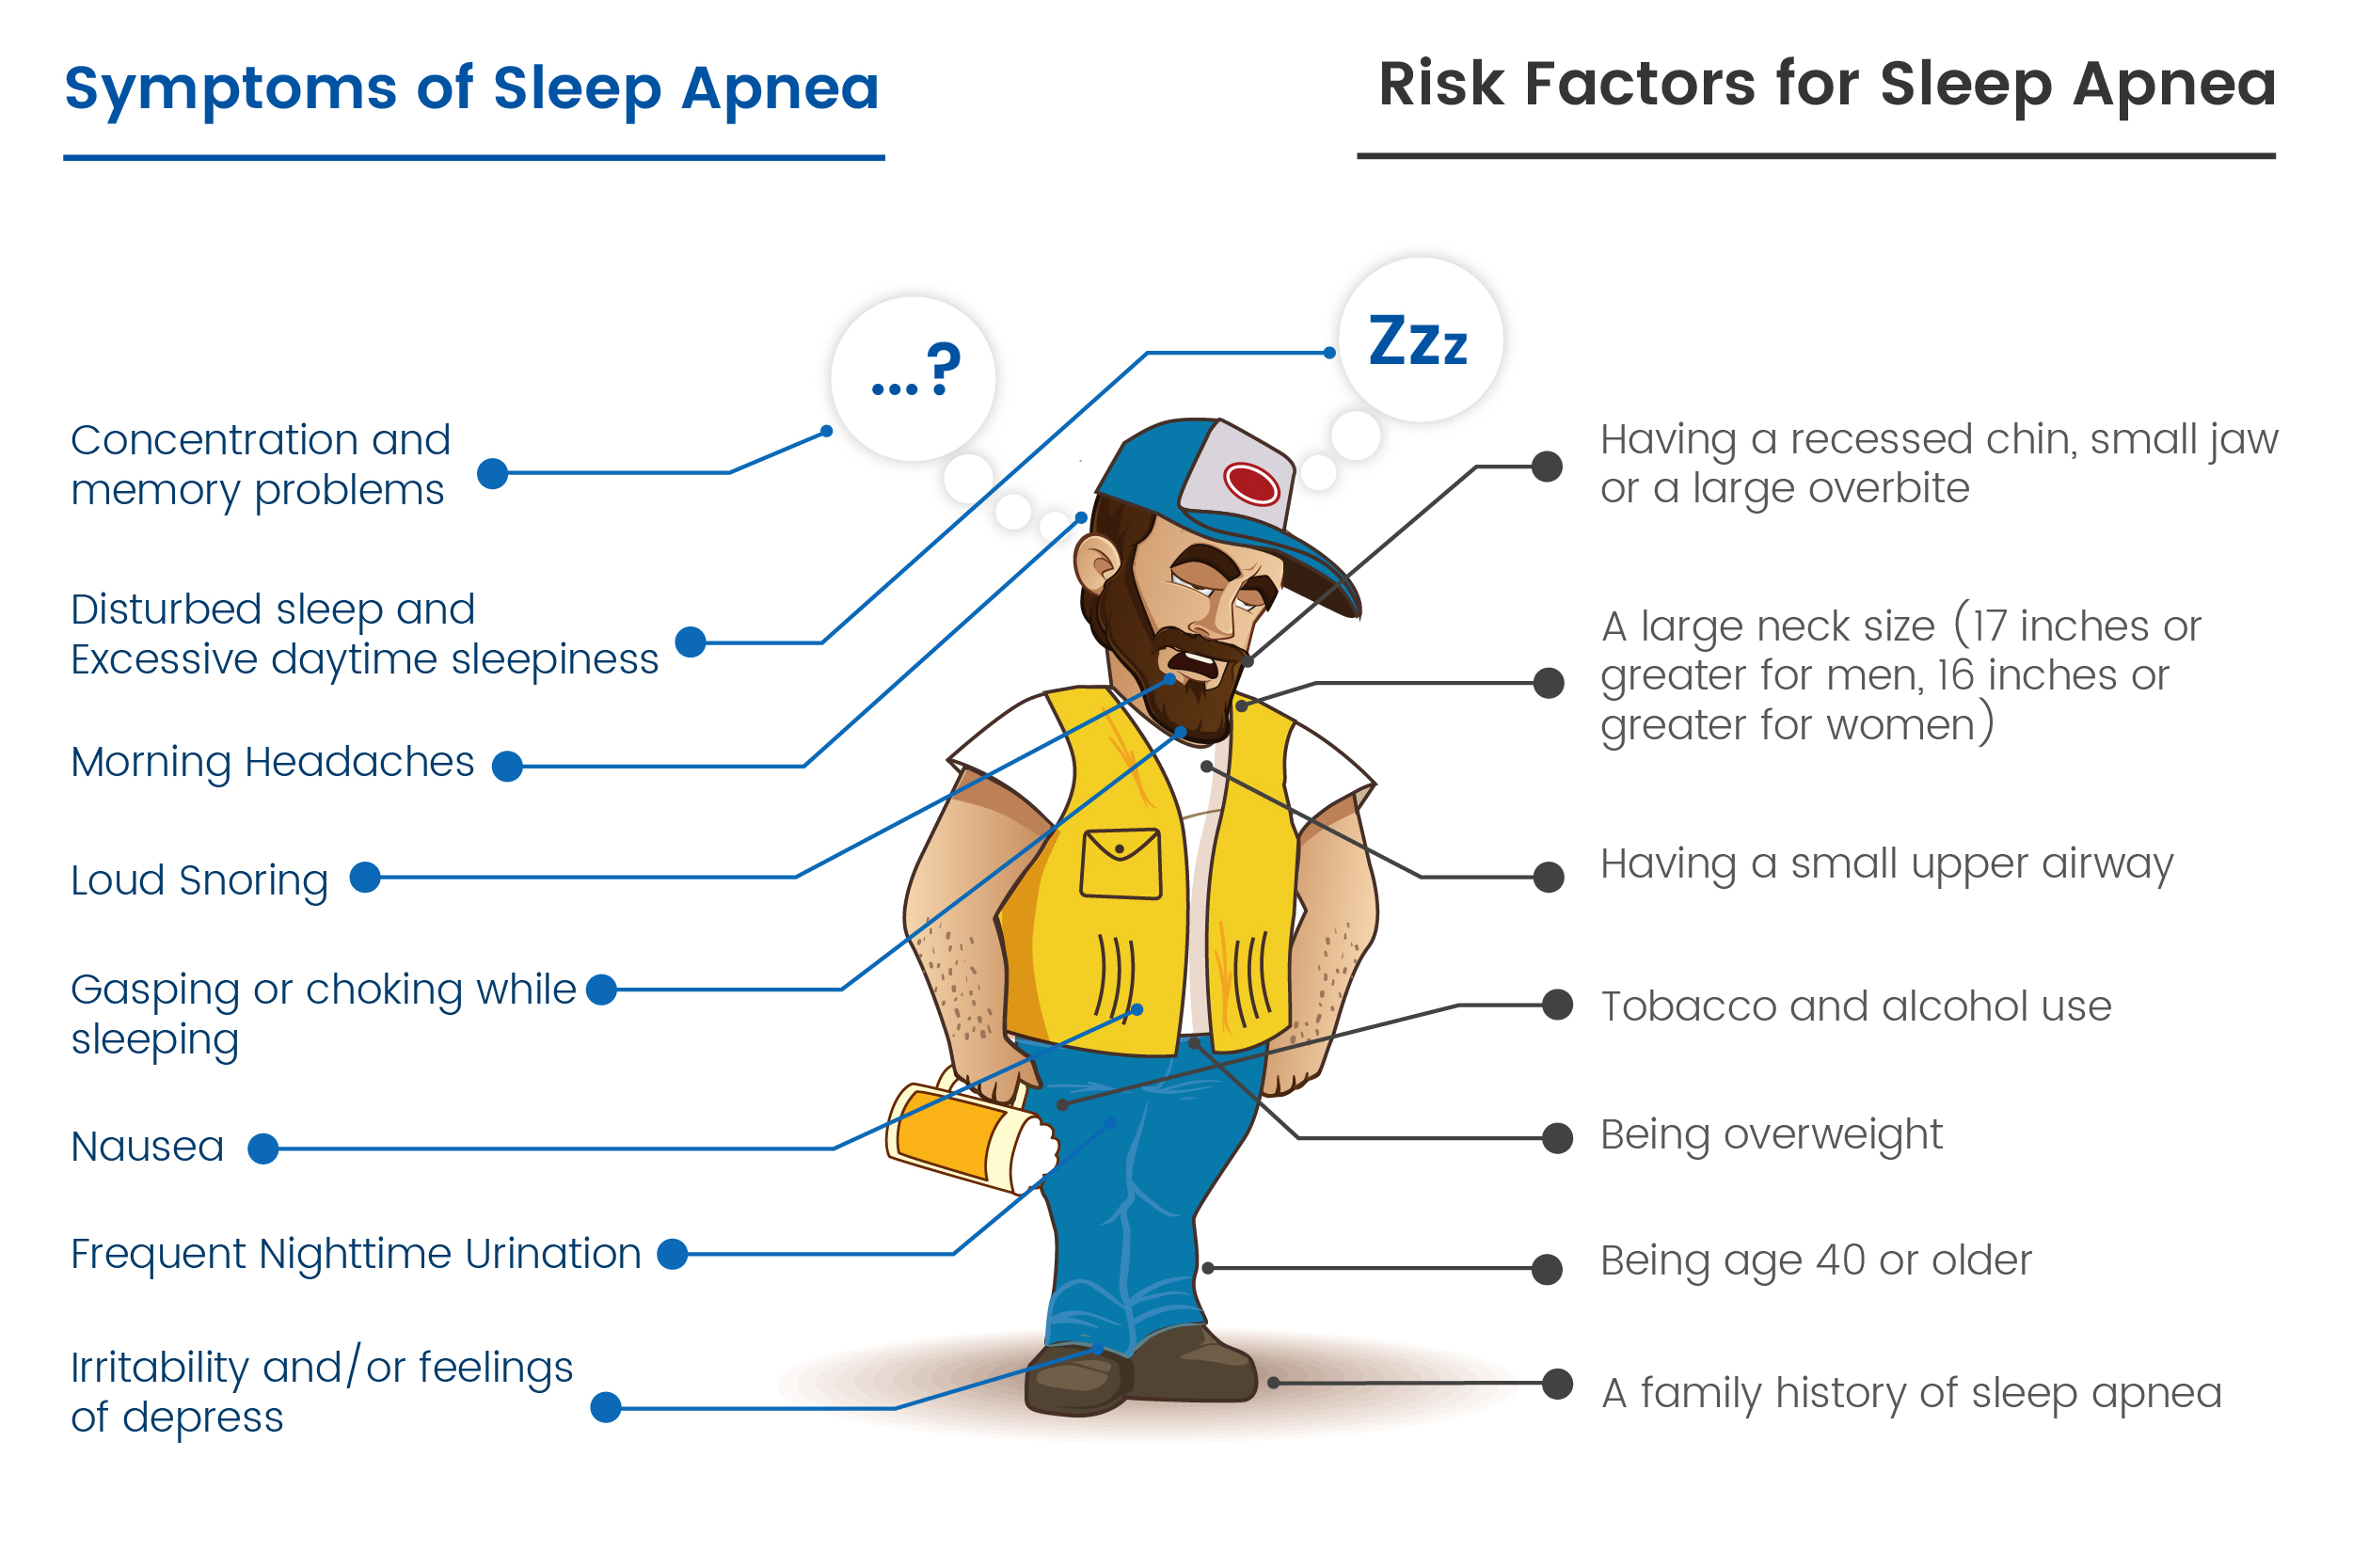 Symptoms and Risks of Sleep Apnea